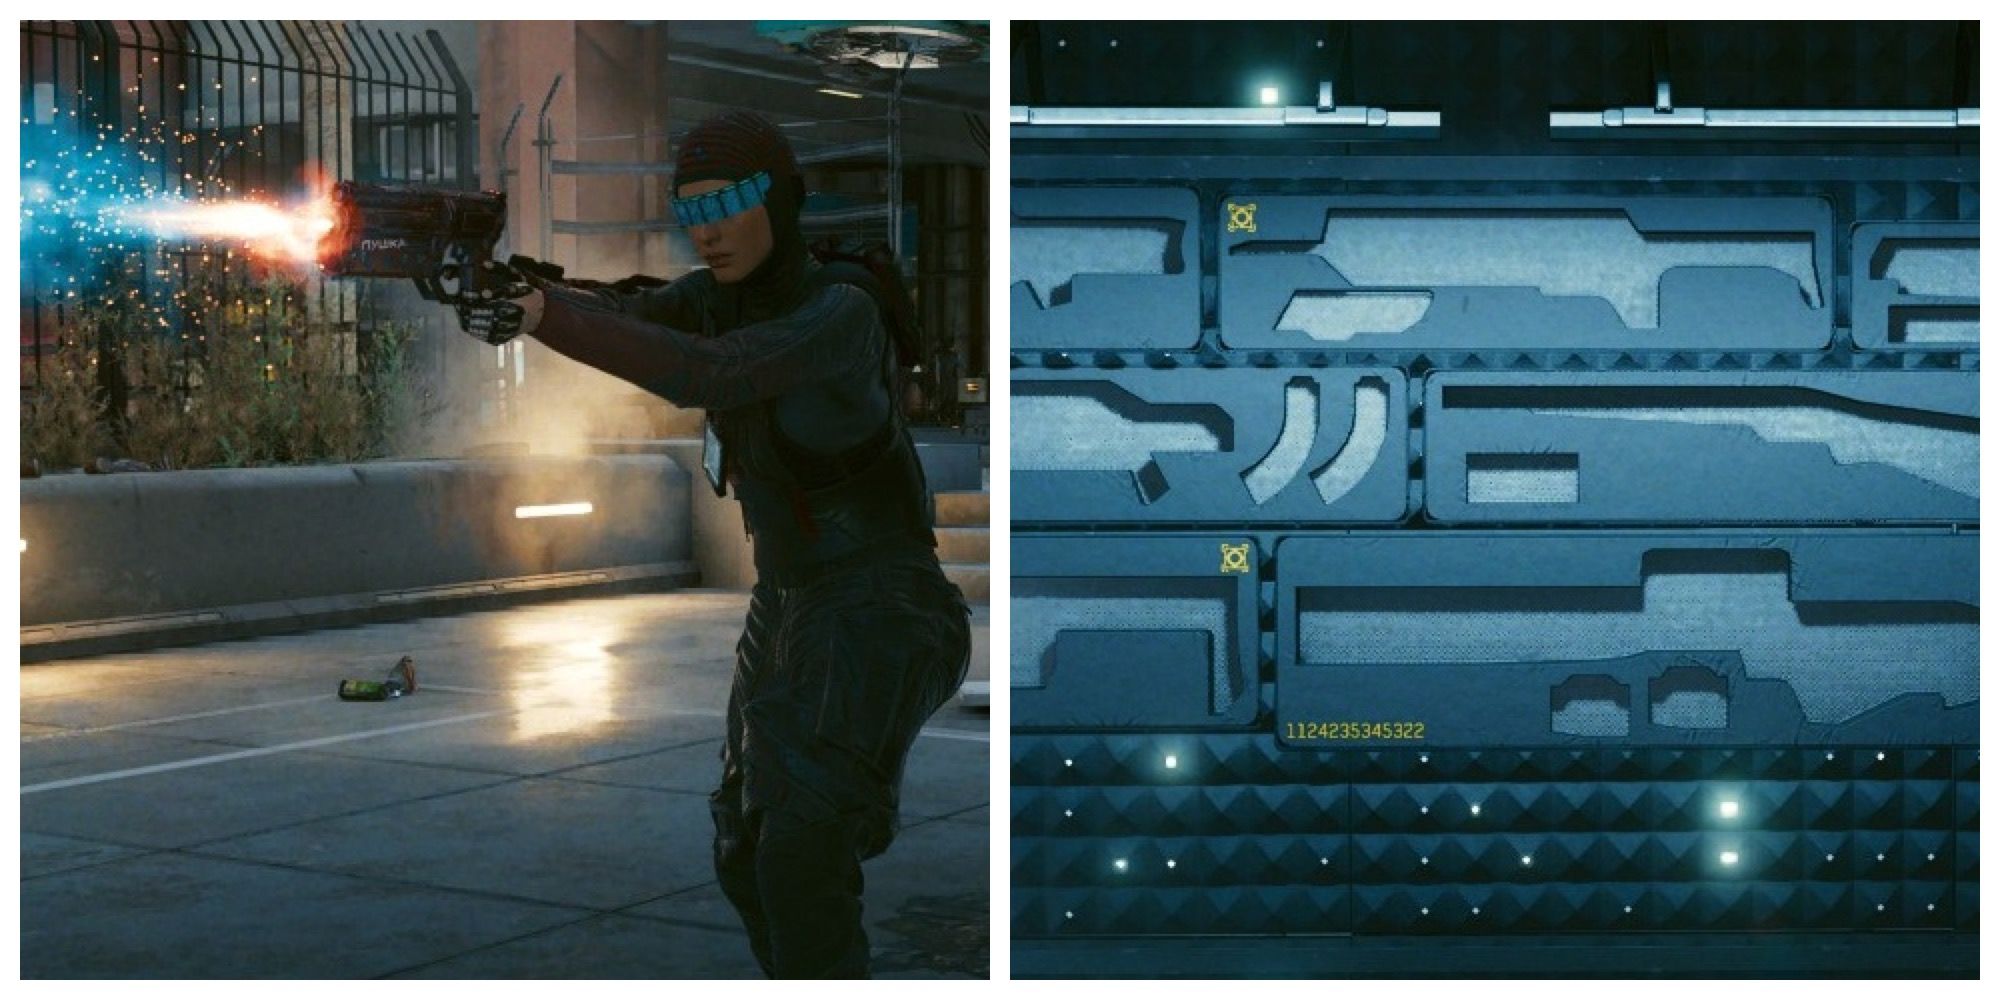 V from Cyberpunk 2077 firing Comrades Hammer next to pic of empty gun wall